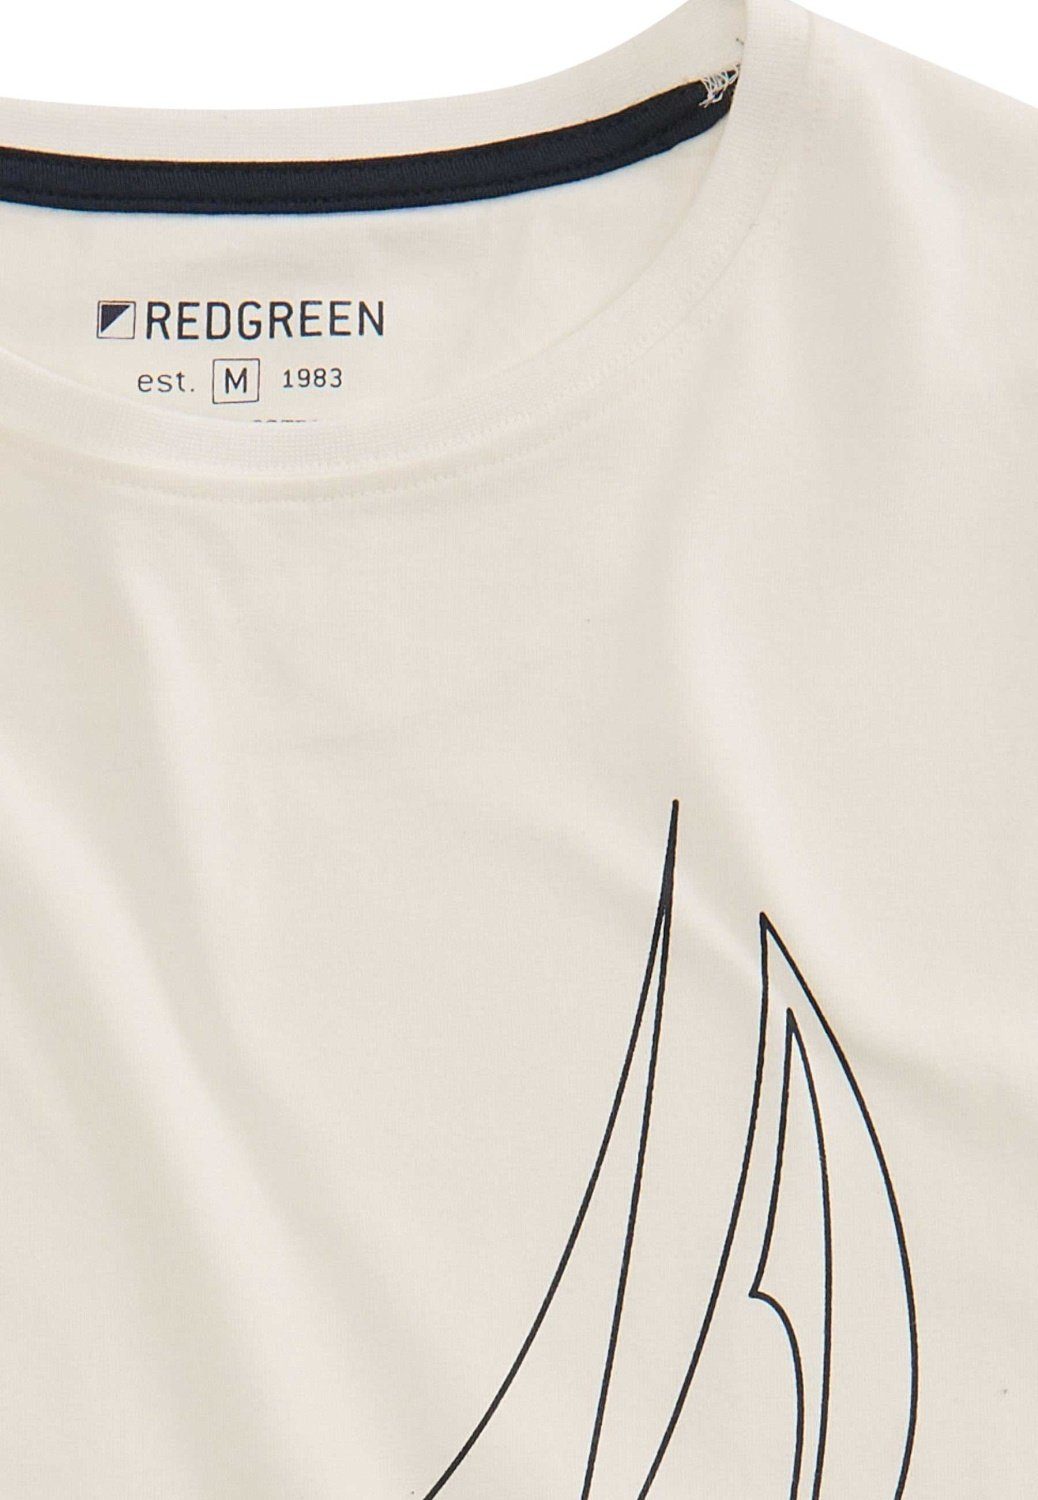 REDGREEN Chet mit Segelboot Print cremeweiß Print-Shirt